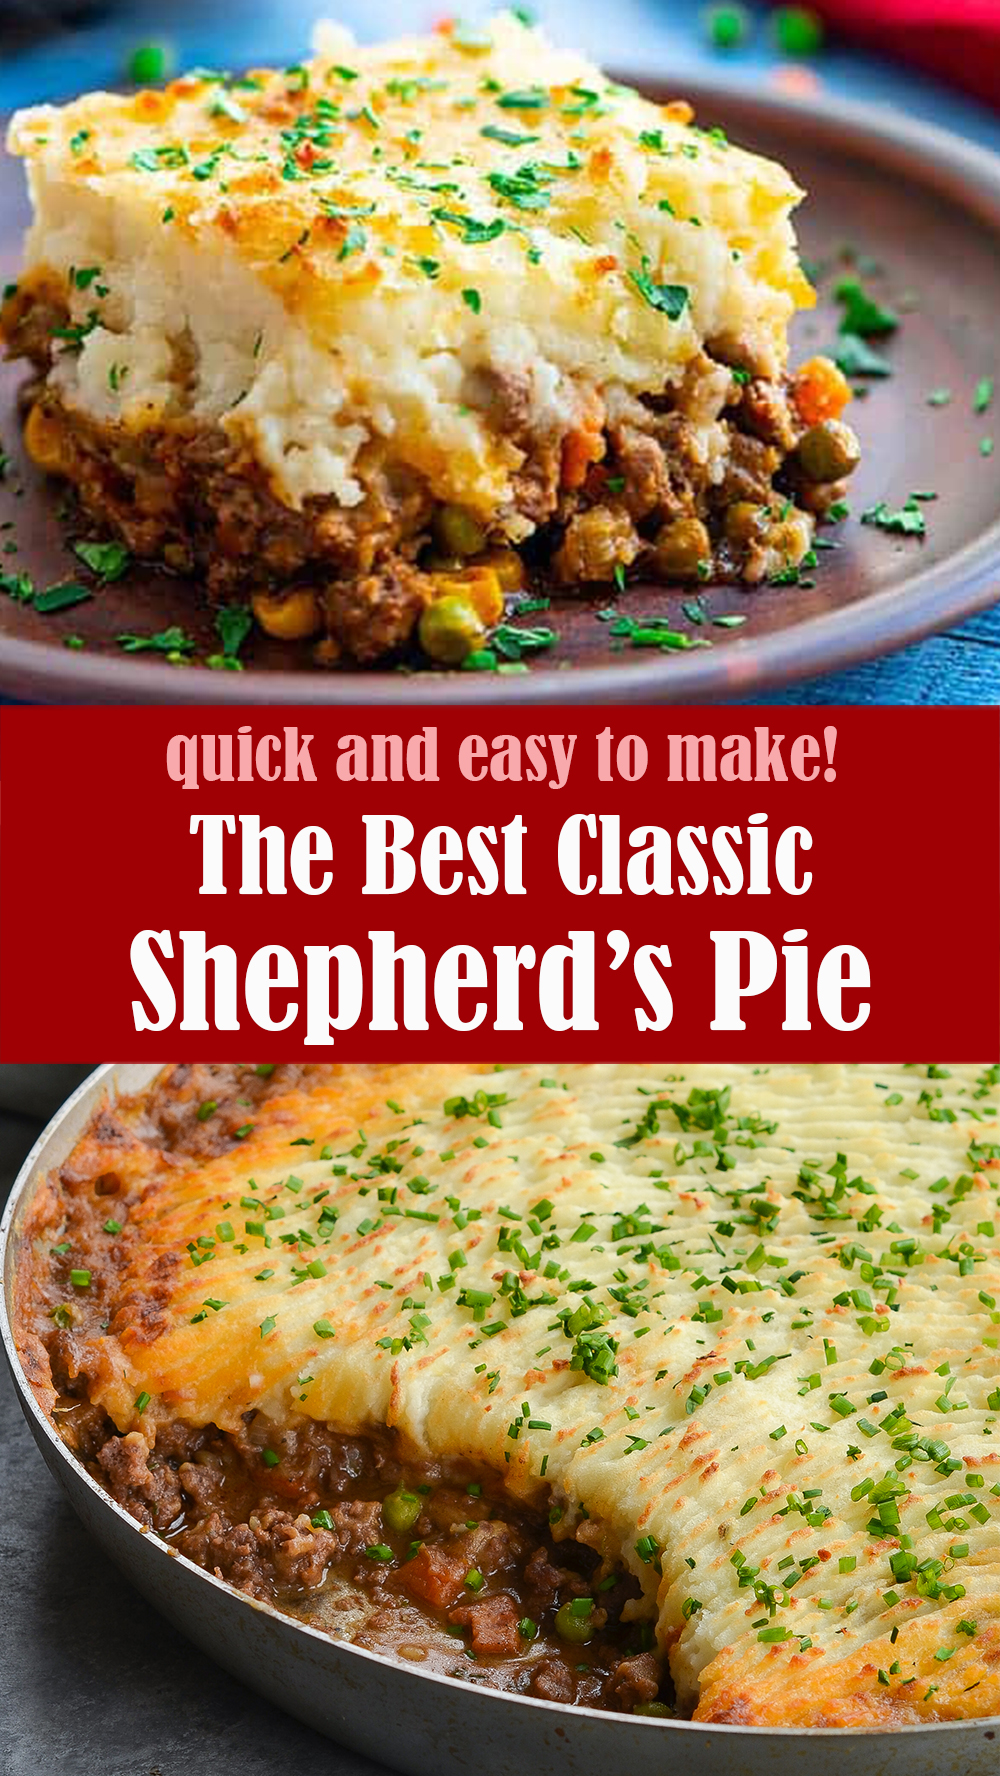 The Best Classic Shepherd’s Pie